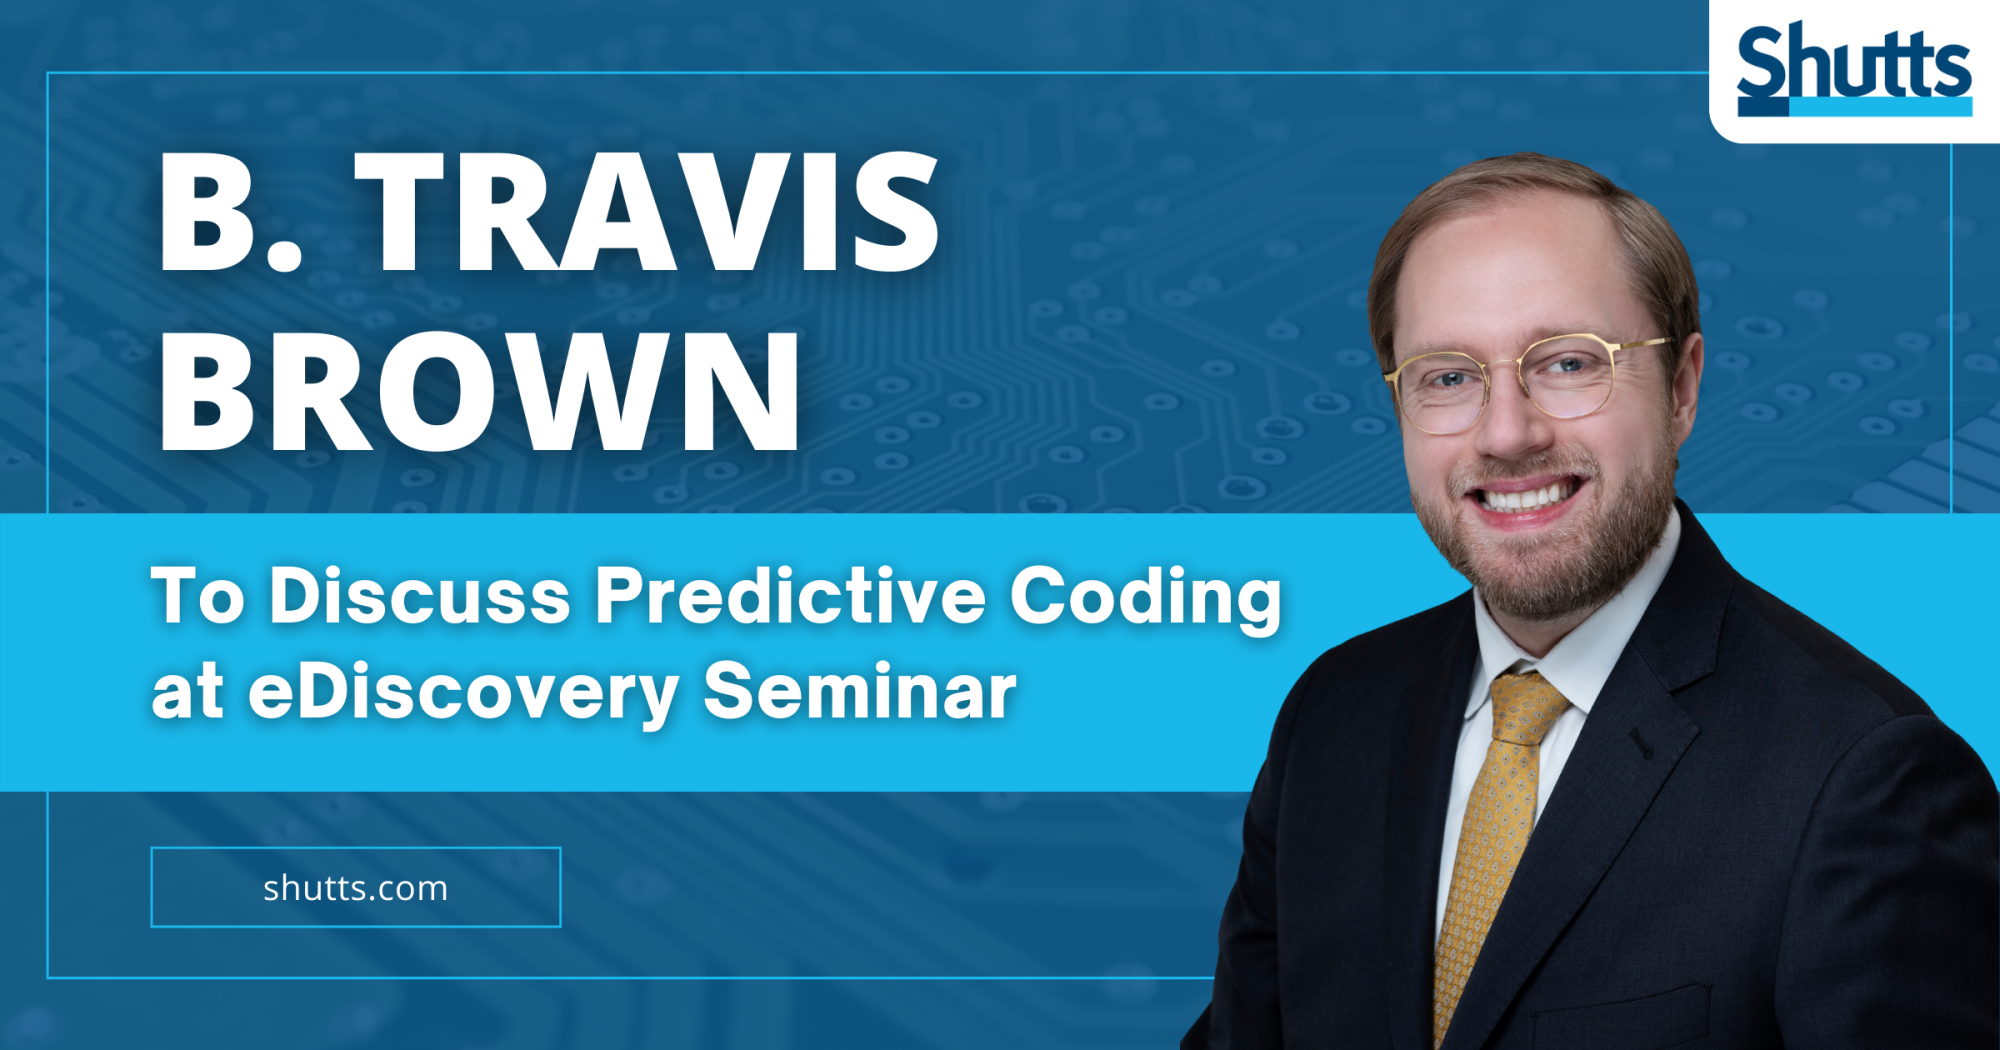 B. Travis Brown to Discuss Predictive Coding at eDiscovery Seminar